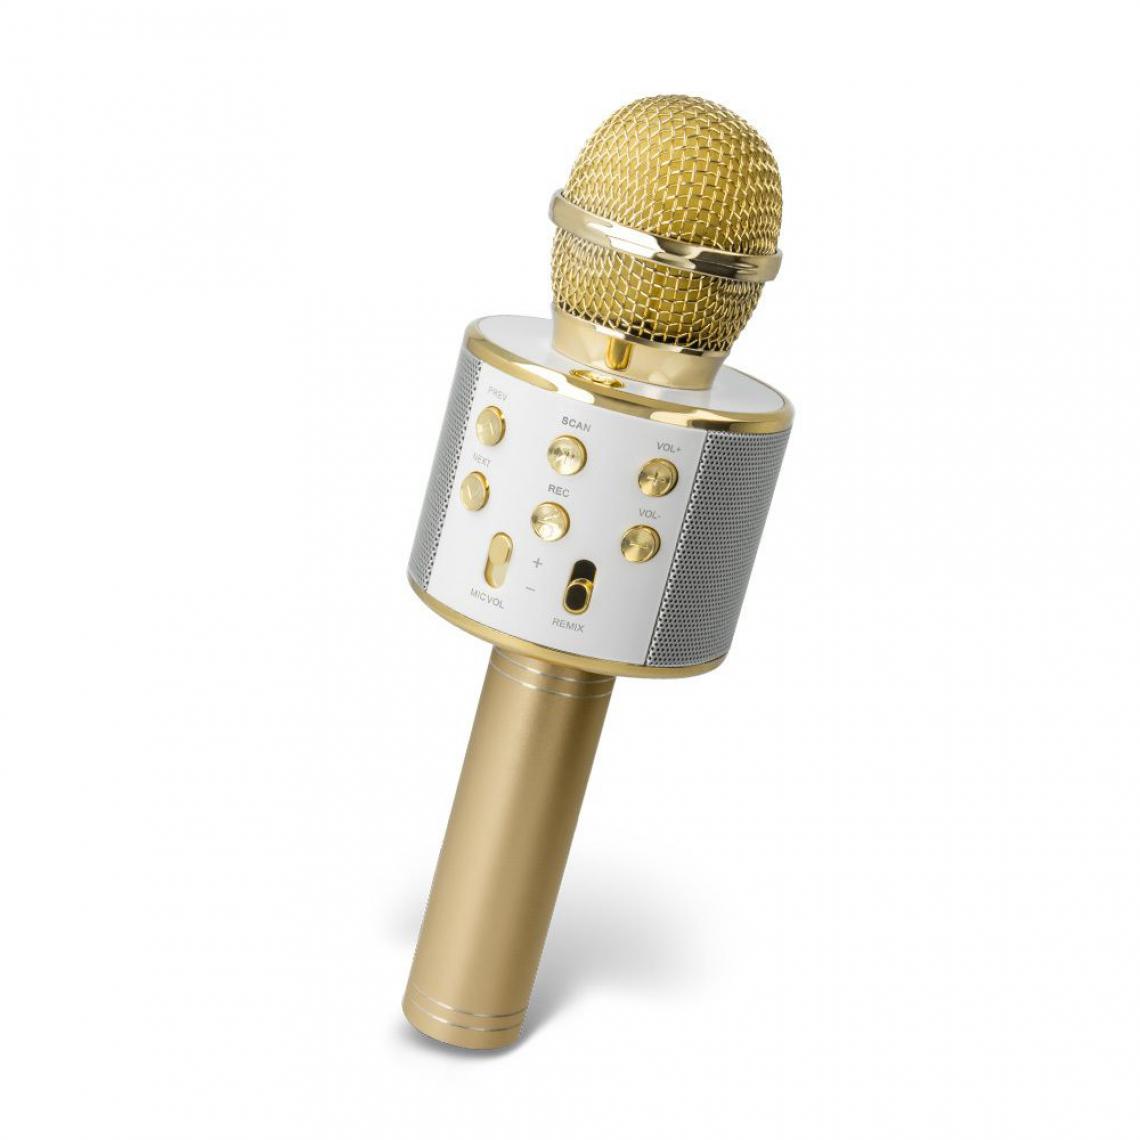 Ozzzo - Microphone Karaoke bluetooth haut parleur ozzzo Gold Or pour HUAWEI P10 Lite - Autres accessoires smartphone